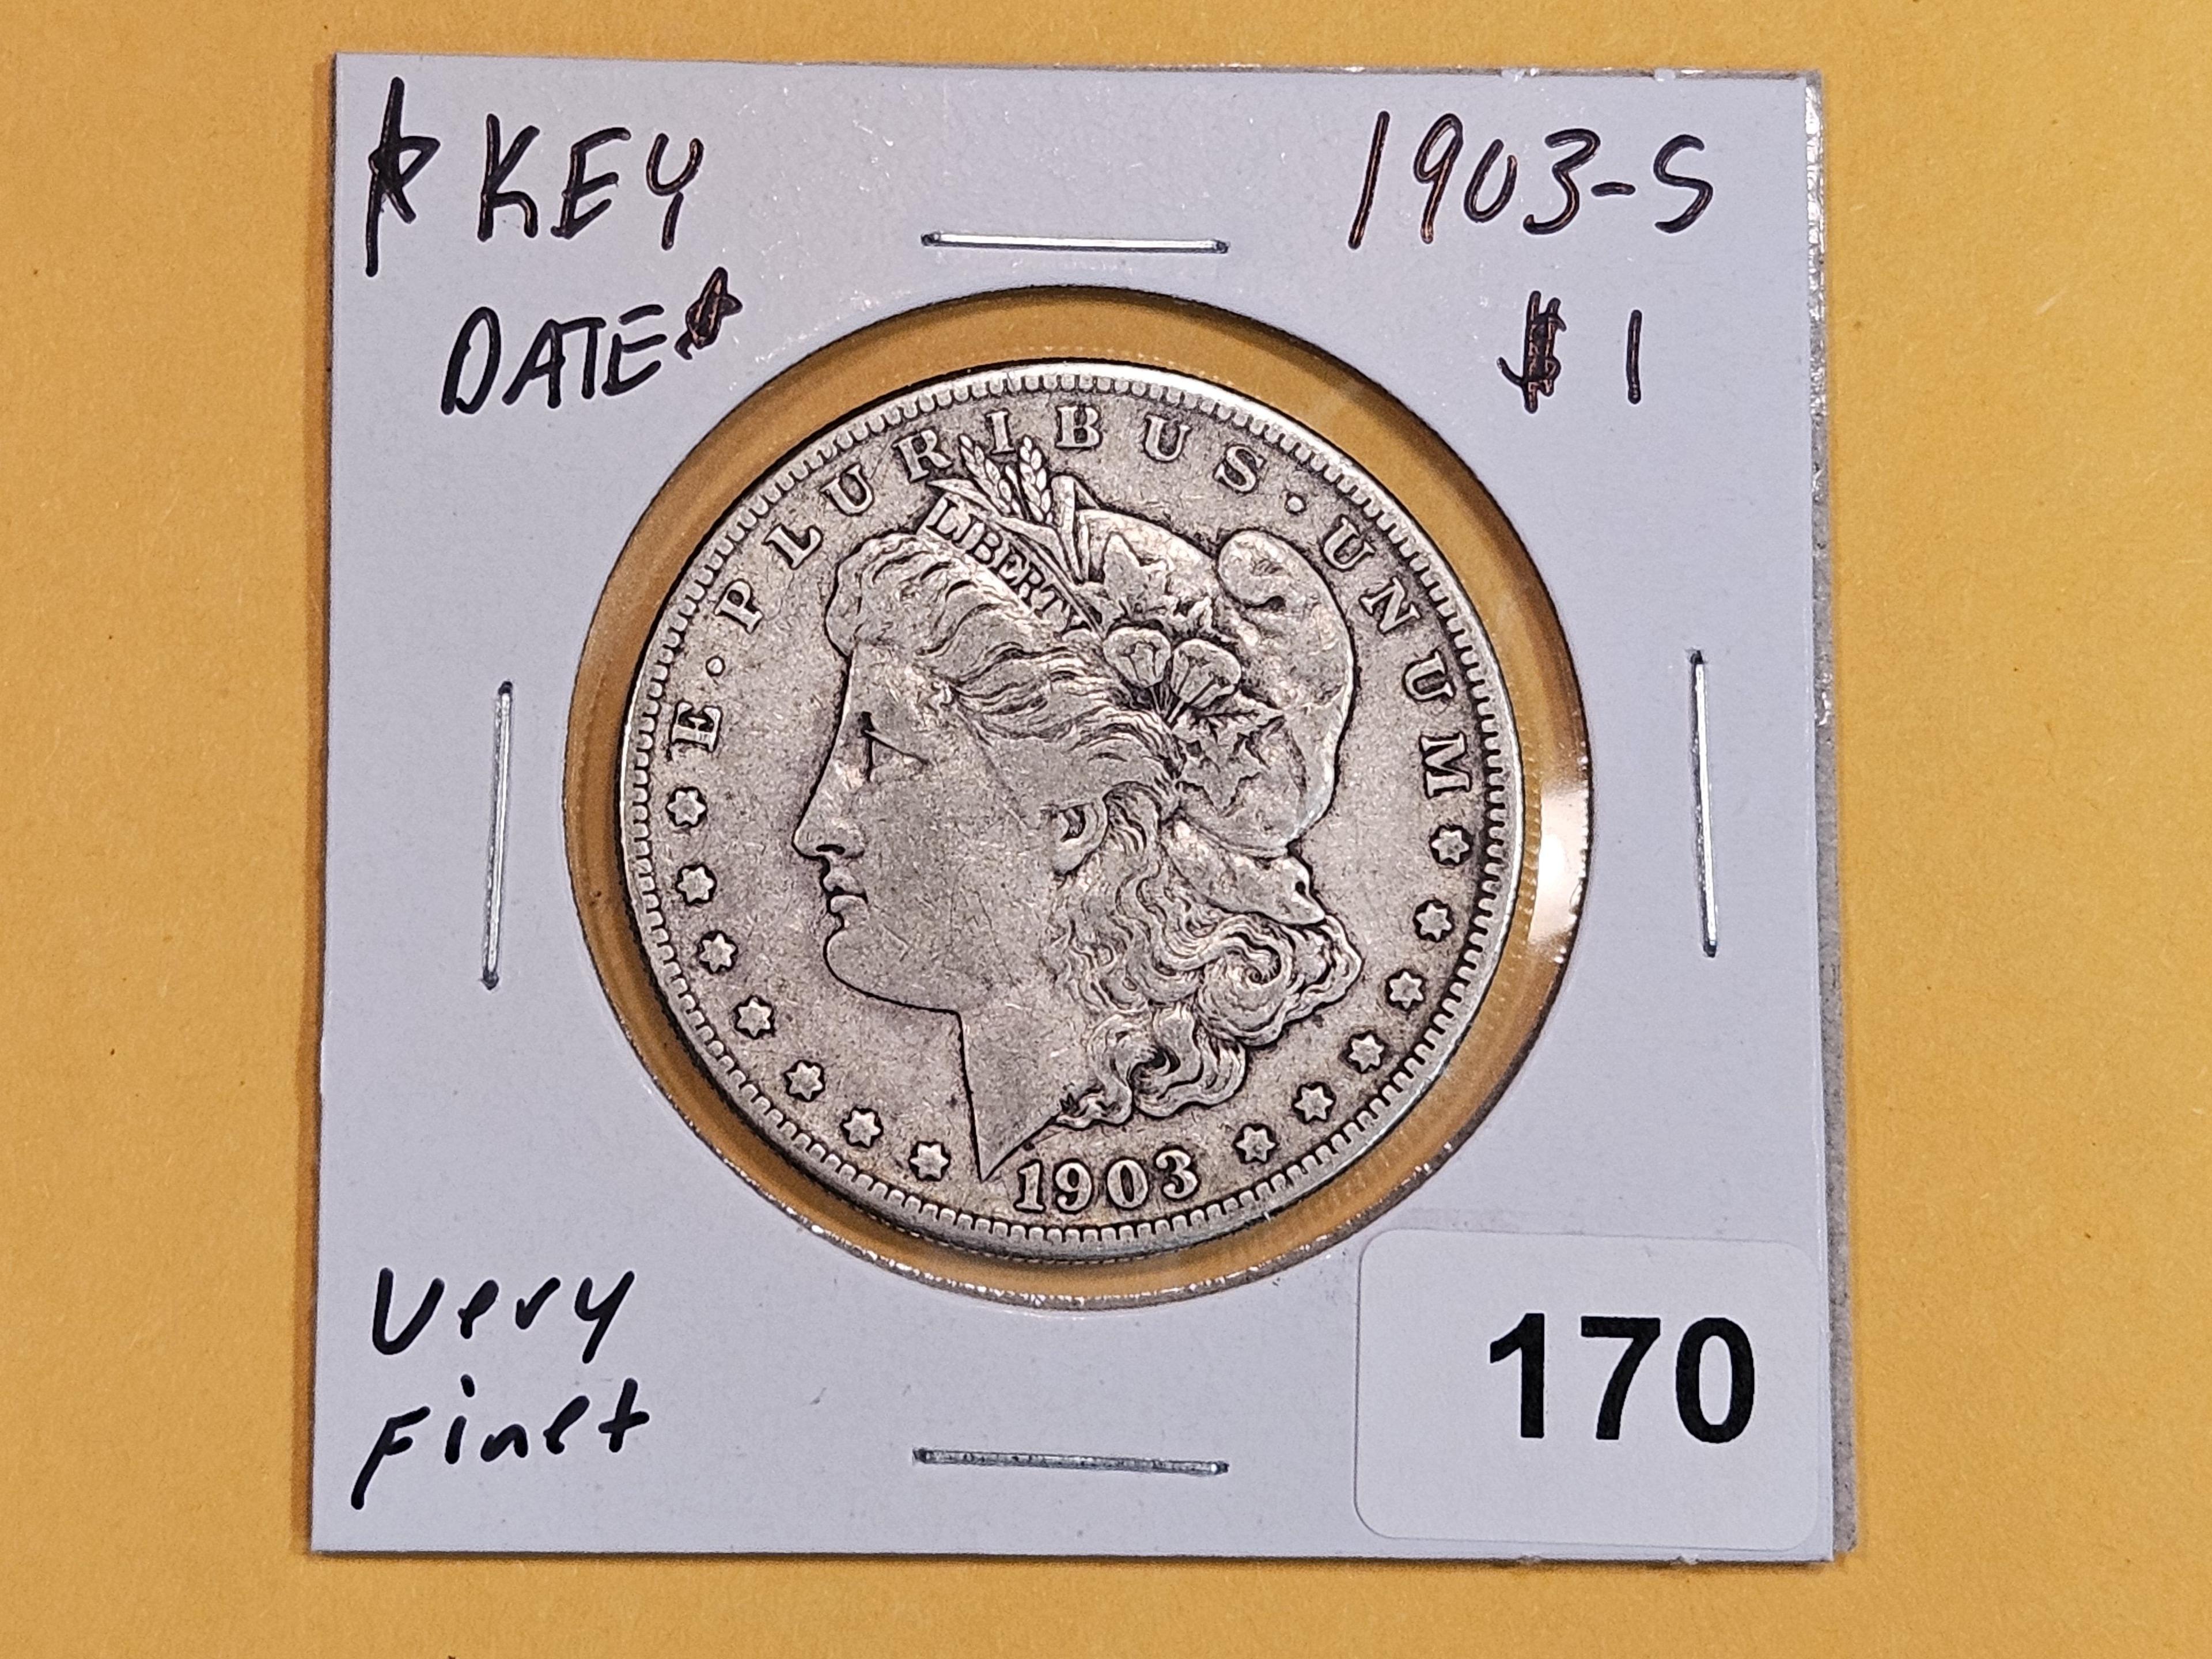 ** KEY DATE ** 1903-S Morgan Dollar in Very Fine plus